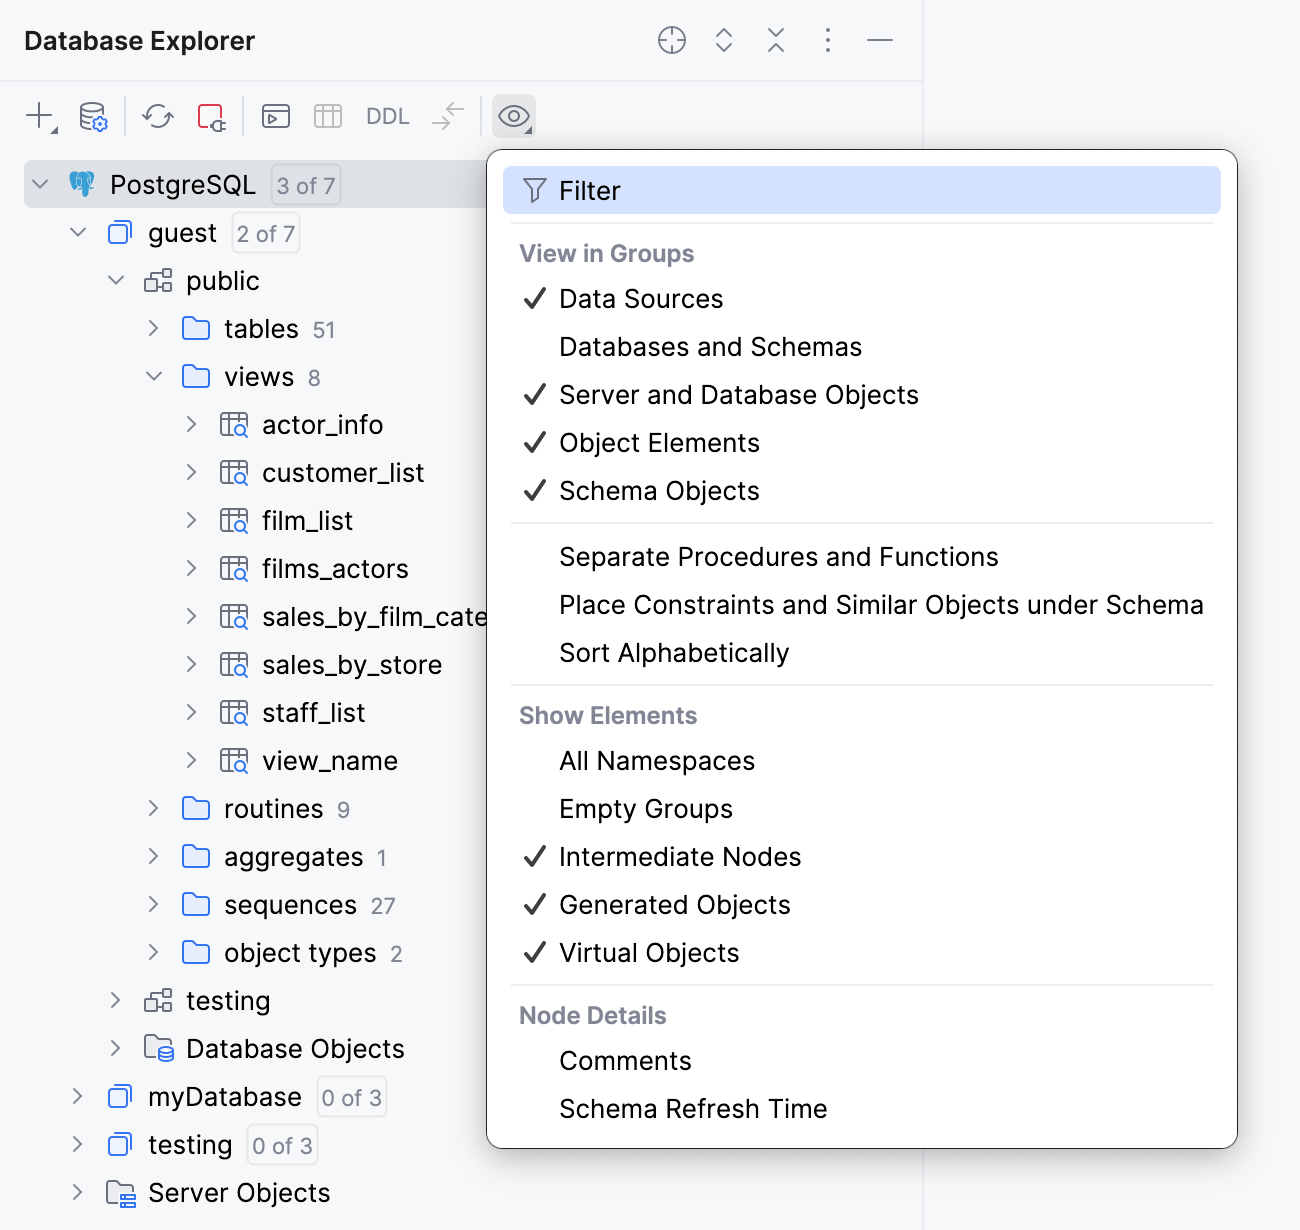 Database Explorer Options menu items